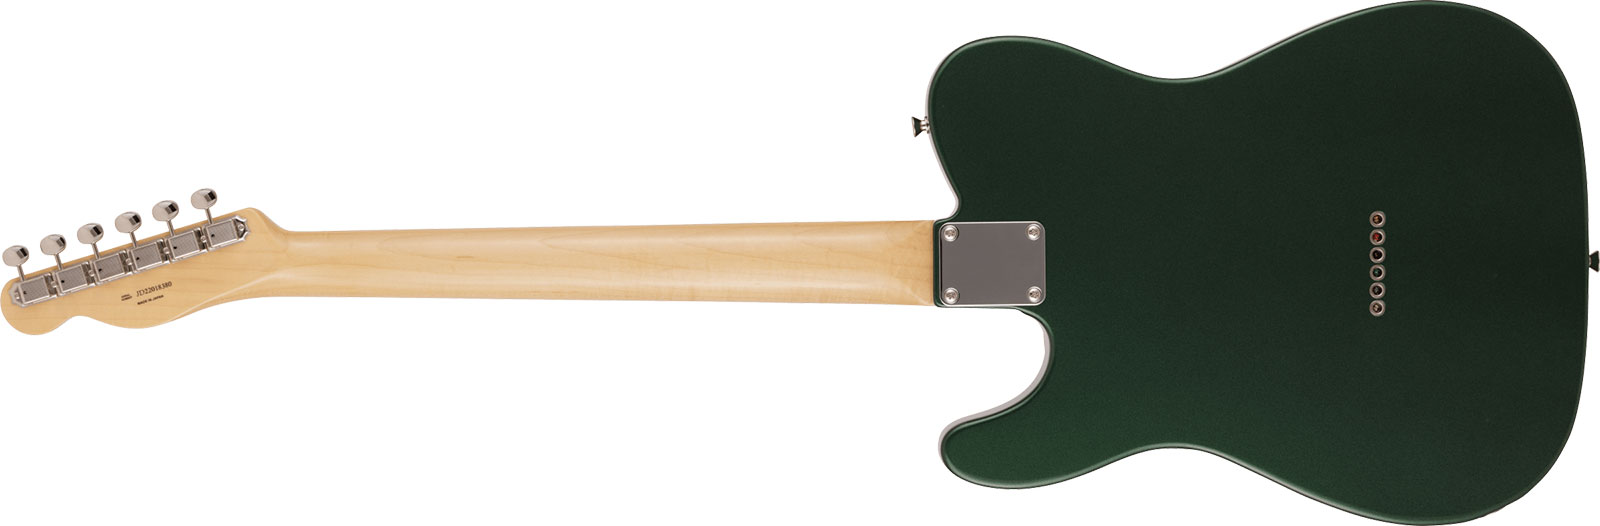 Fender Tele Traditional 60s Mij 2s Ht Rw - Aged Sherwood Green Metallic - Televorm elektrische gitaar - Variation 1